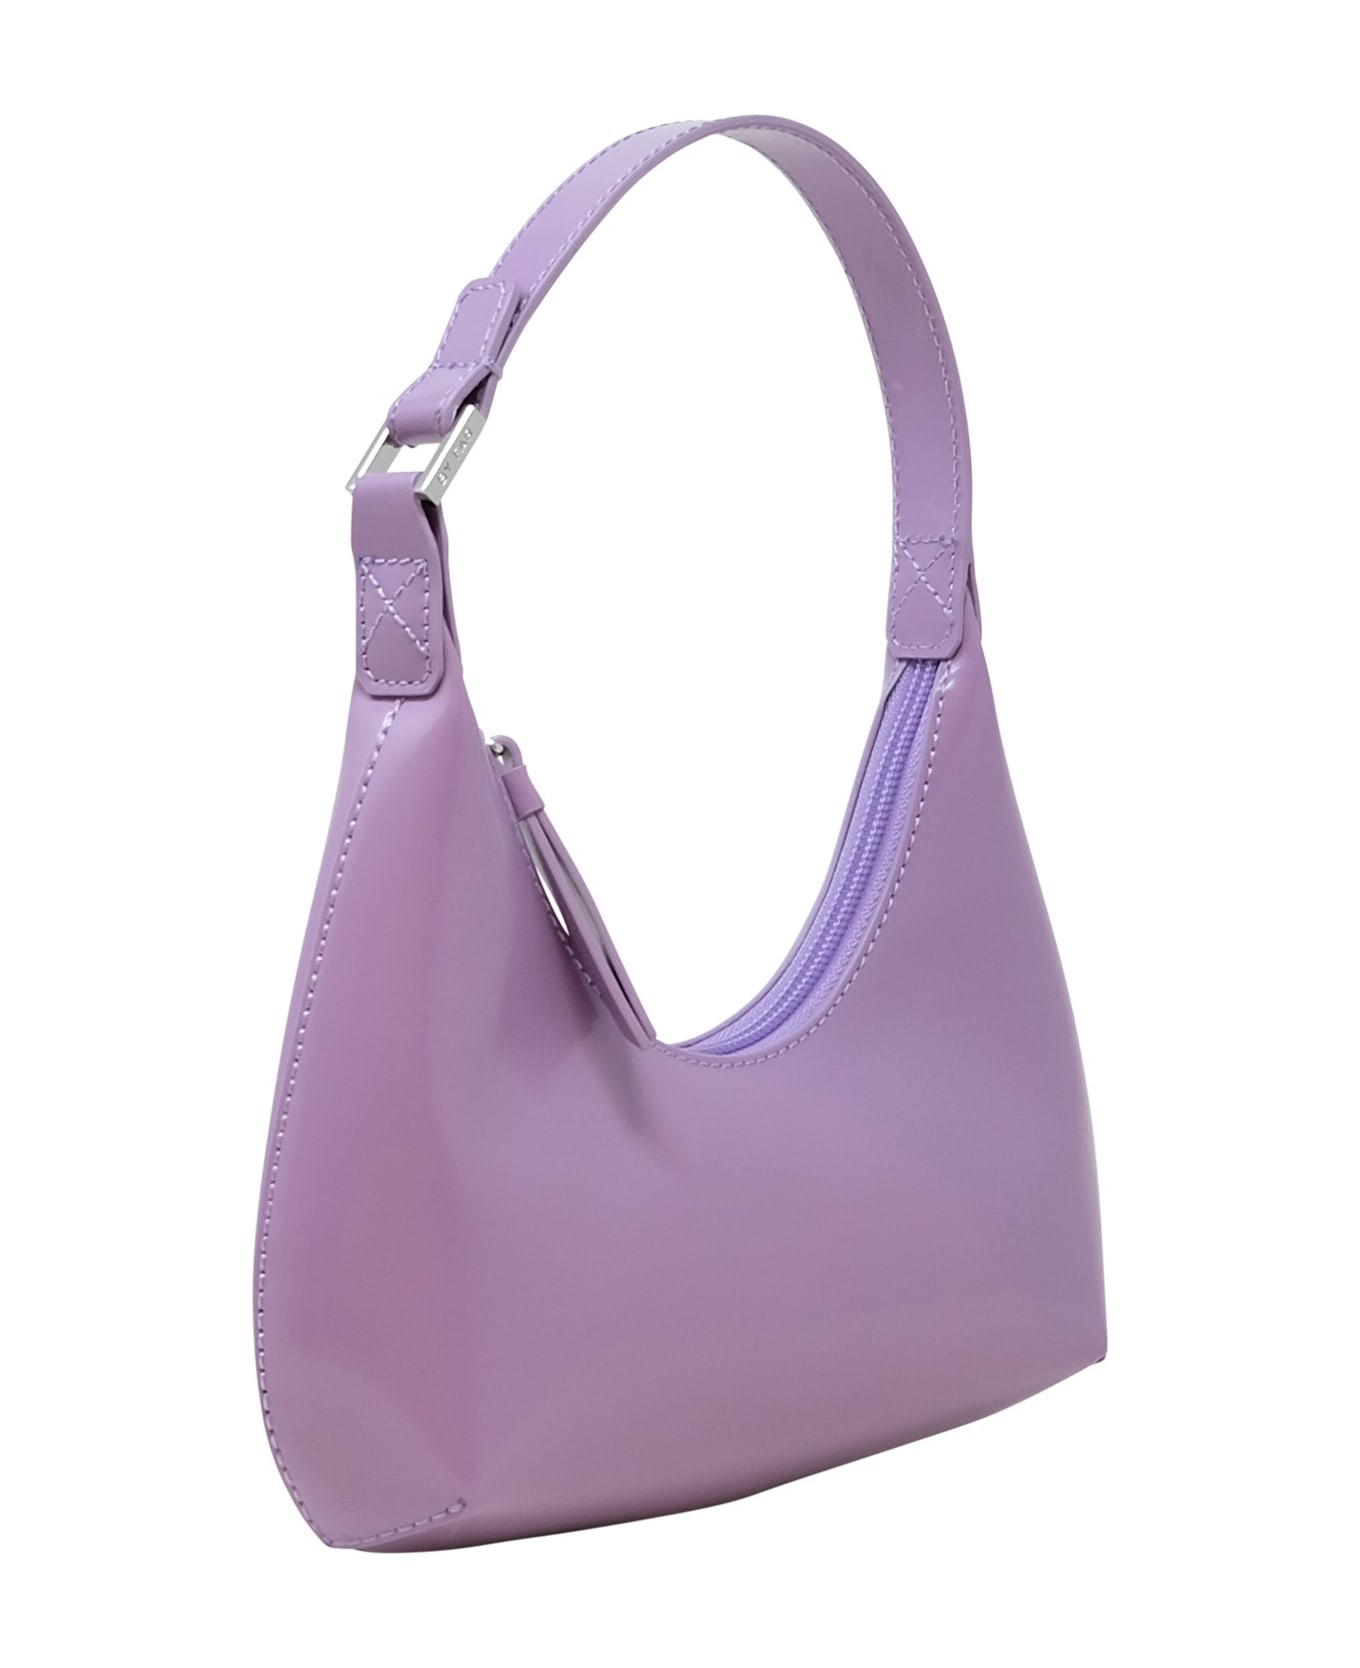 BY FAR Baby Amber Purple Haze Patent Leather Handbag - PURPLE